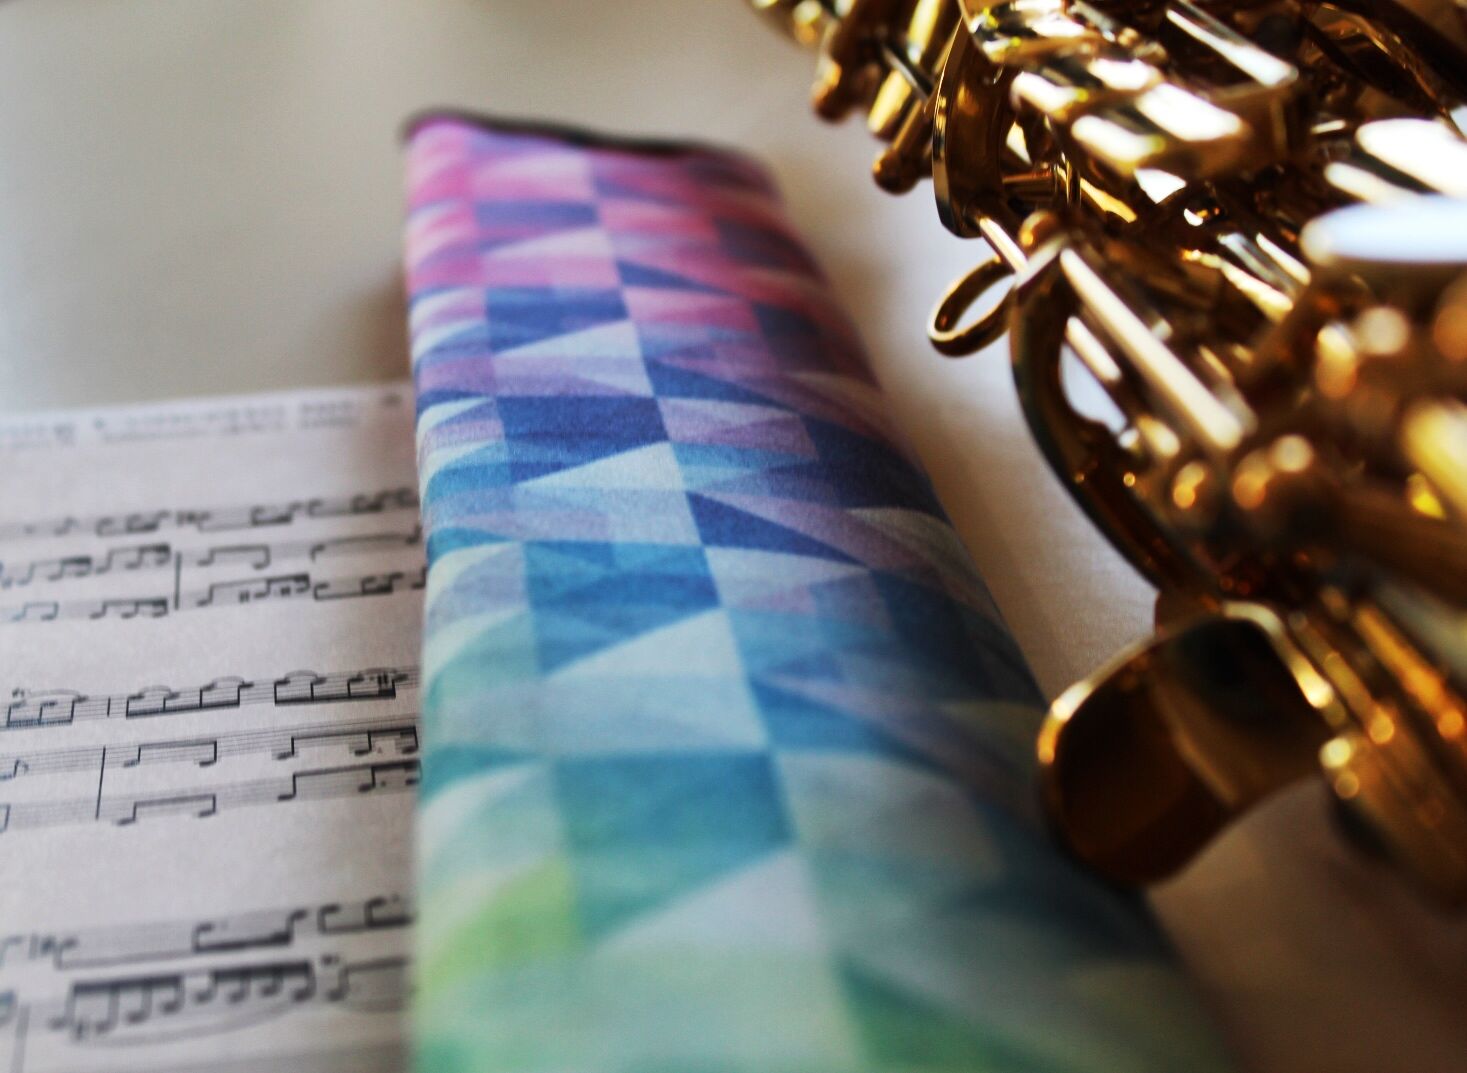 saxophone on microfibre cloth